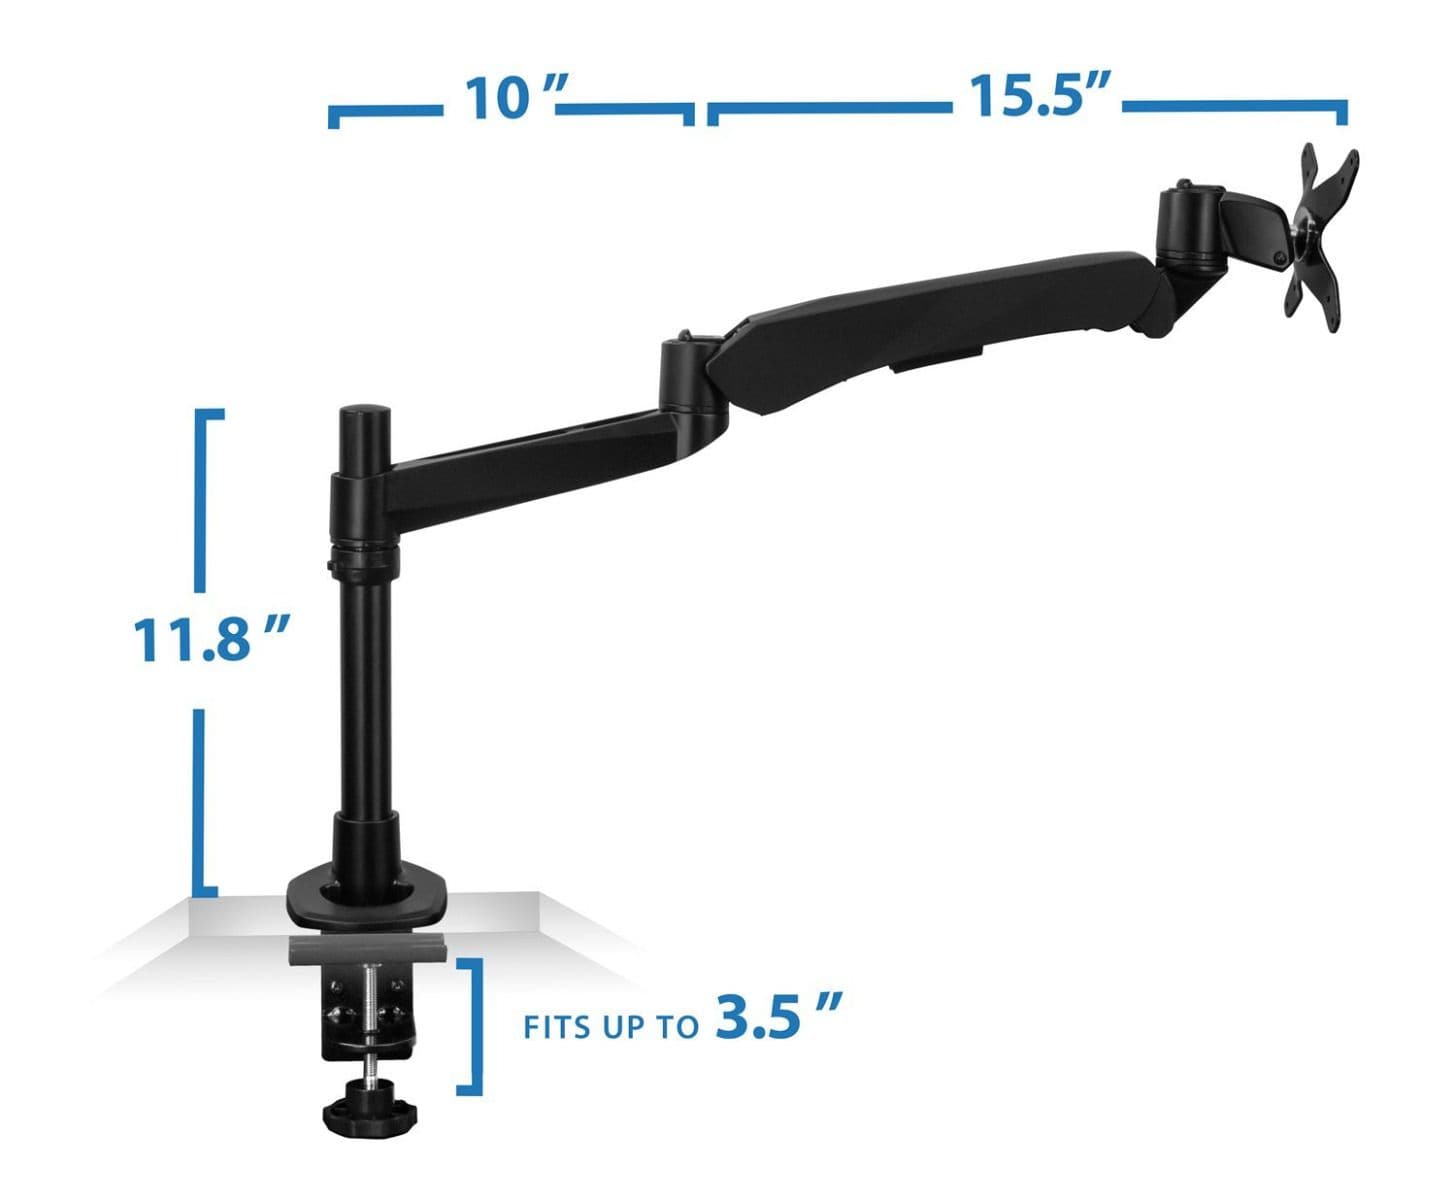 Professional Spring Arm Single Monitor Desk Mount - Mount-It!